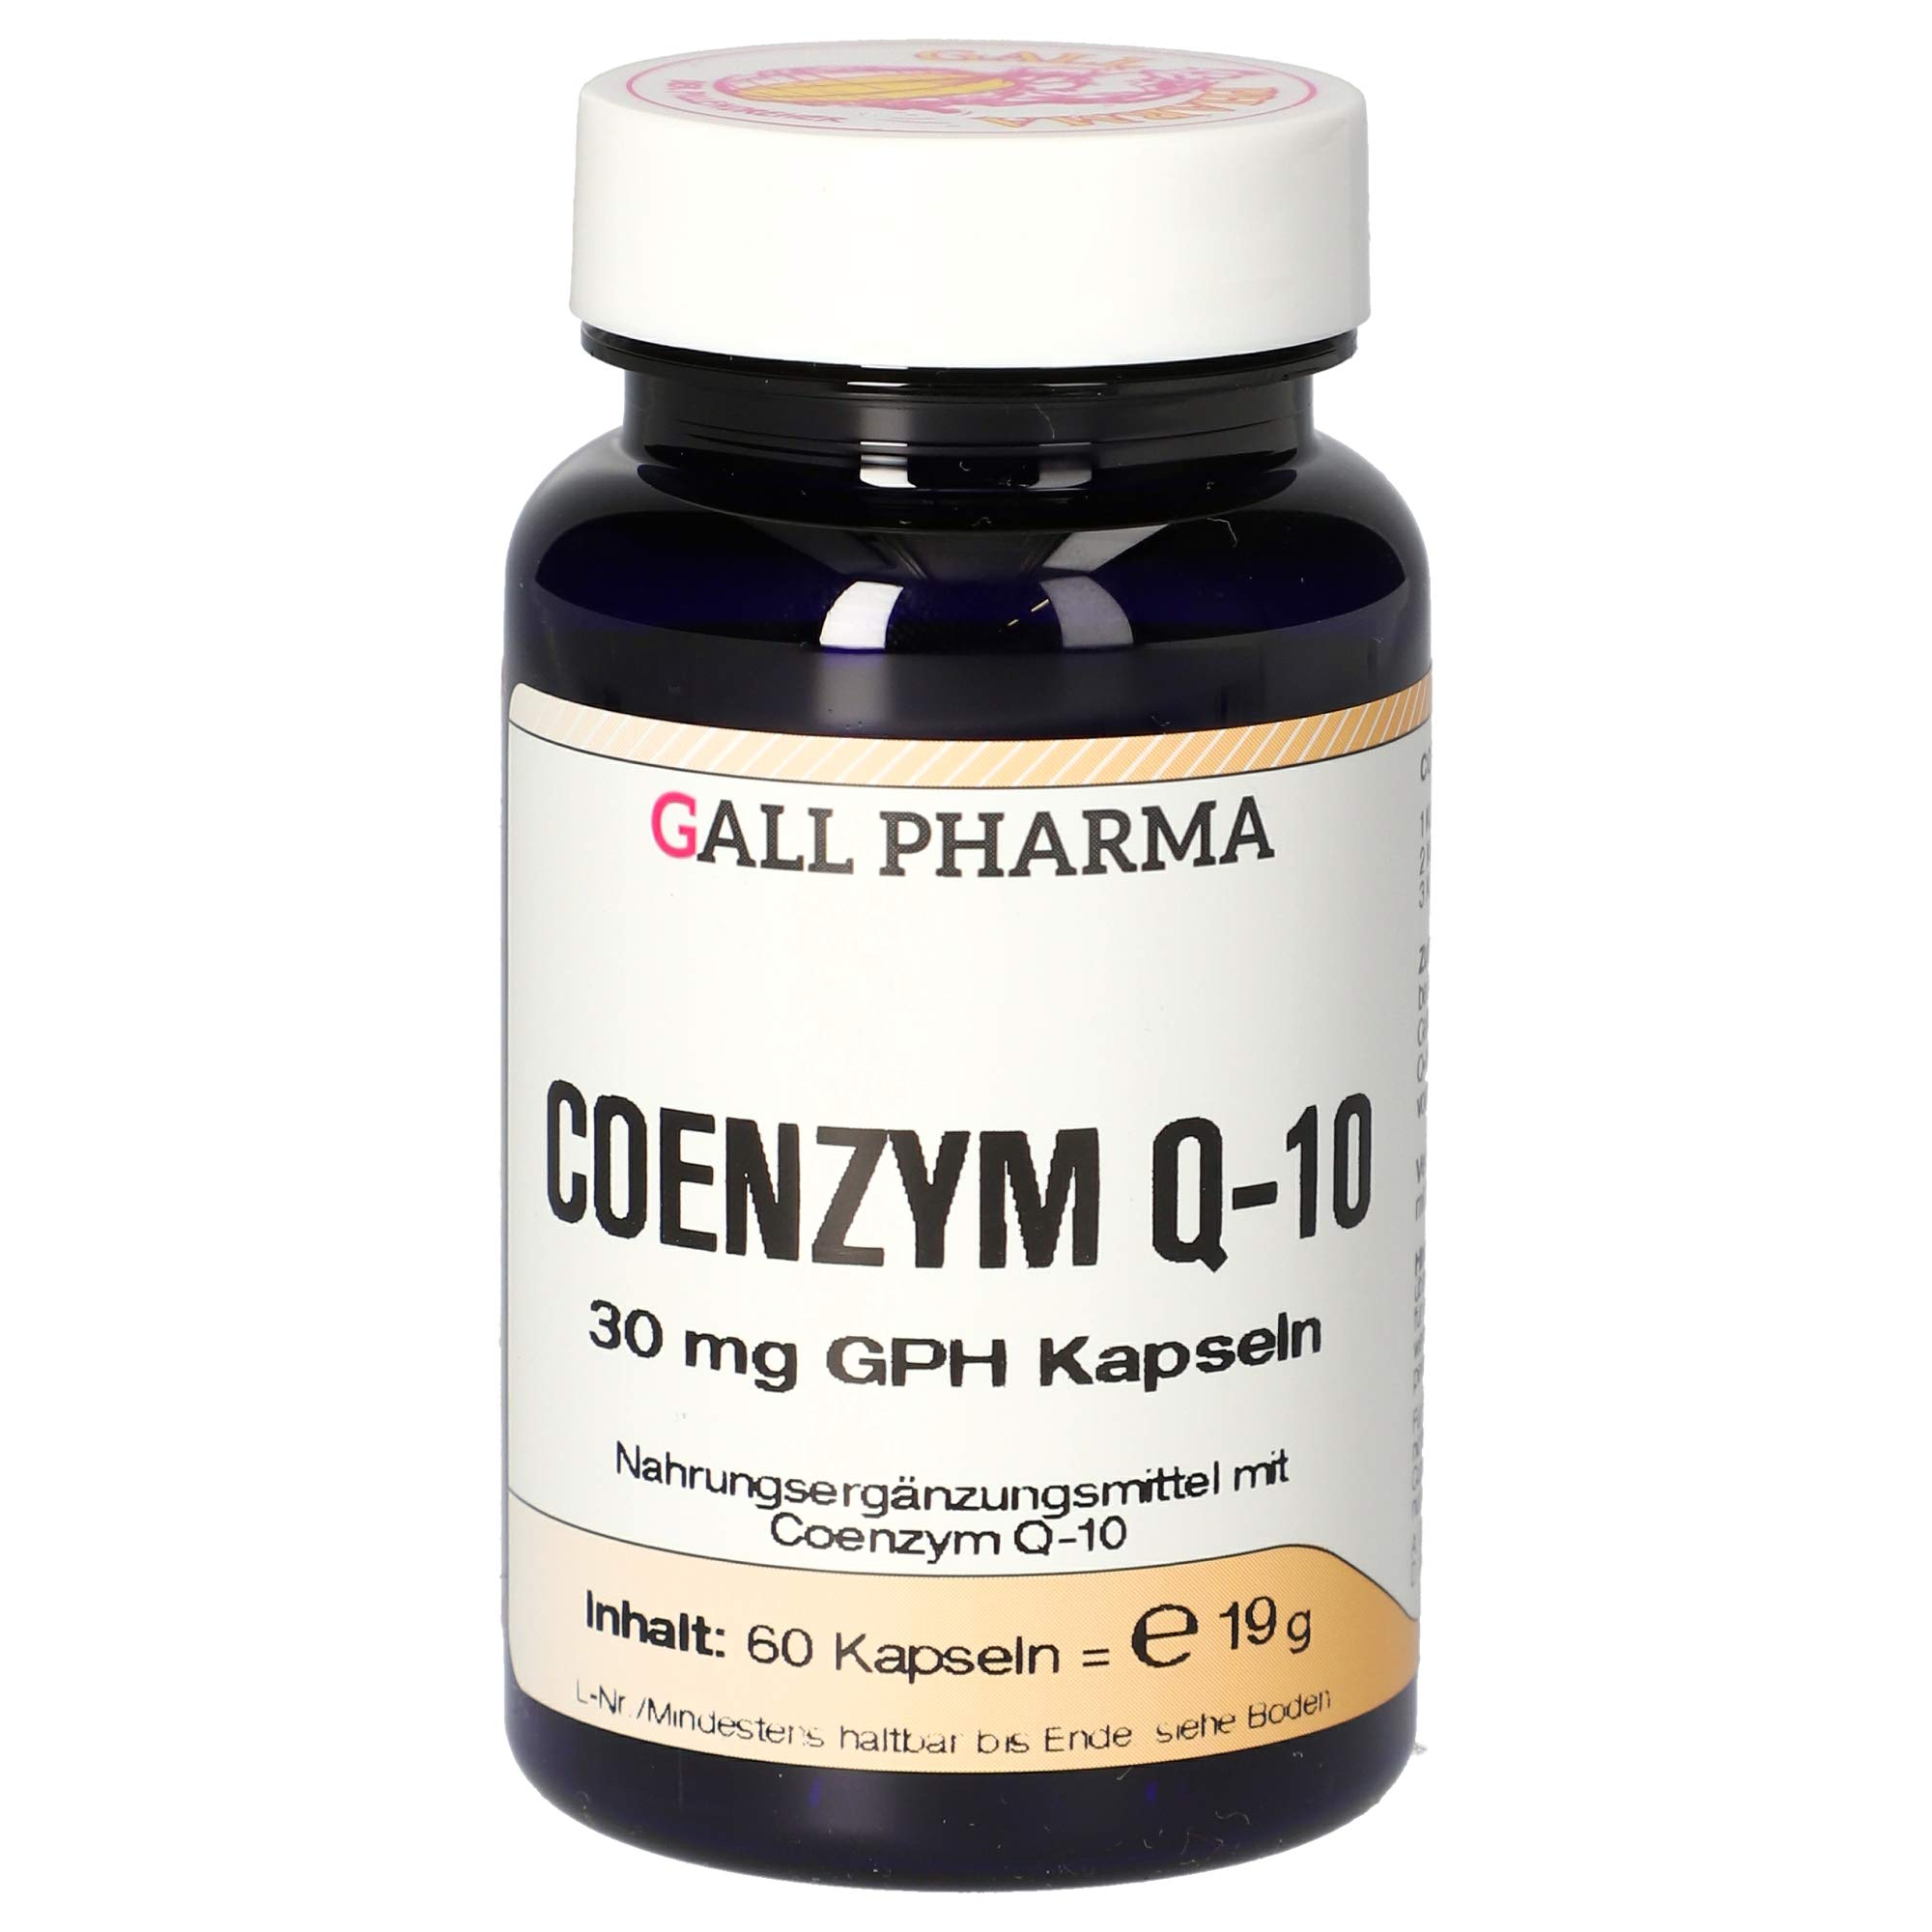 Gall Pharma Coenzym Q-10 30 mg GPH Kapseln, 60 Kapseln